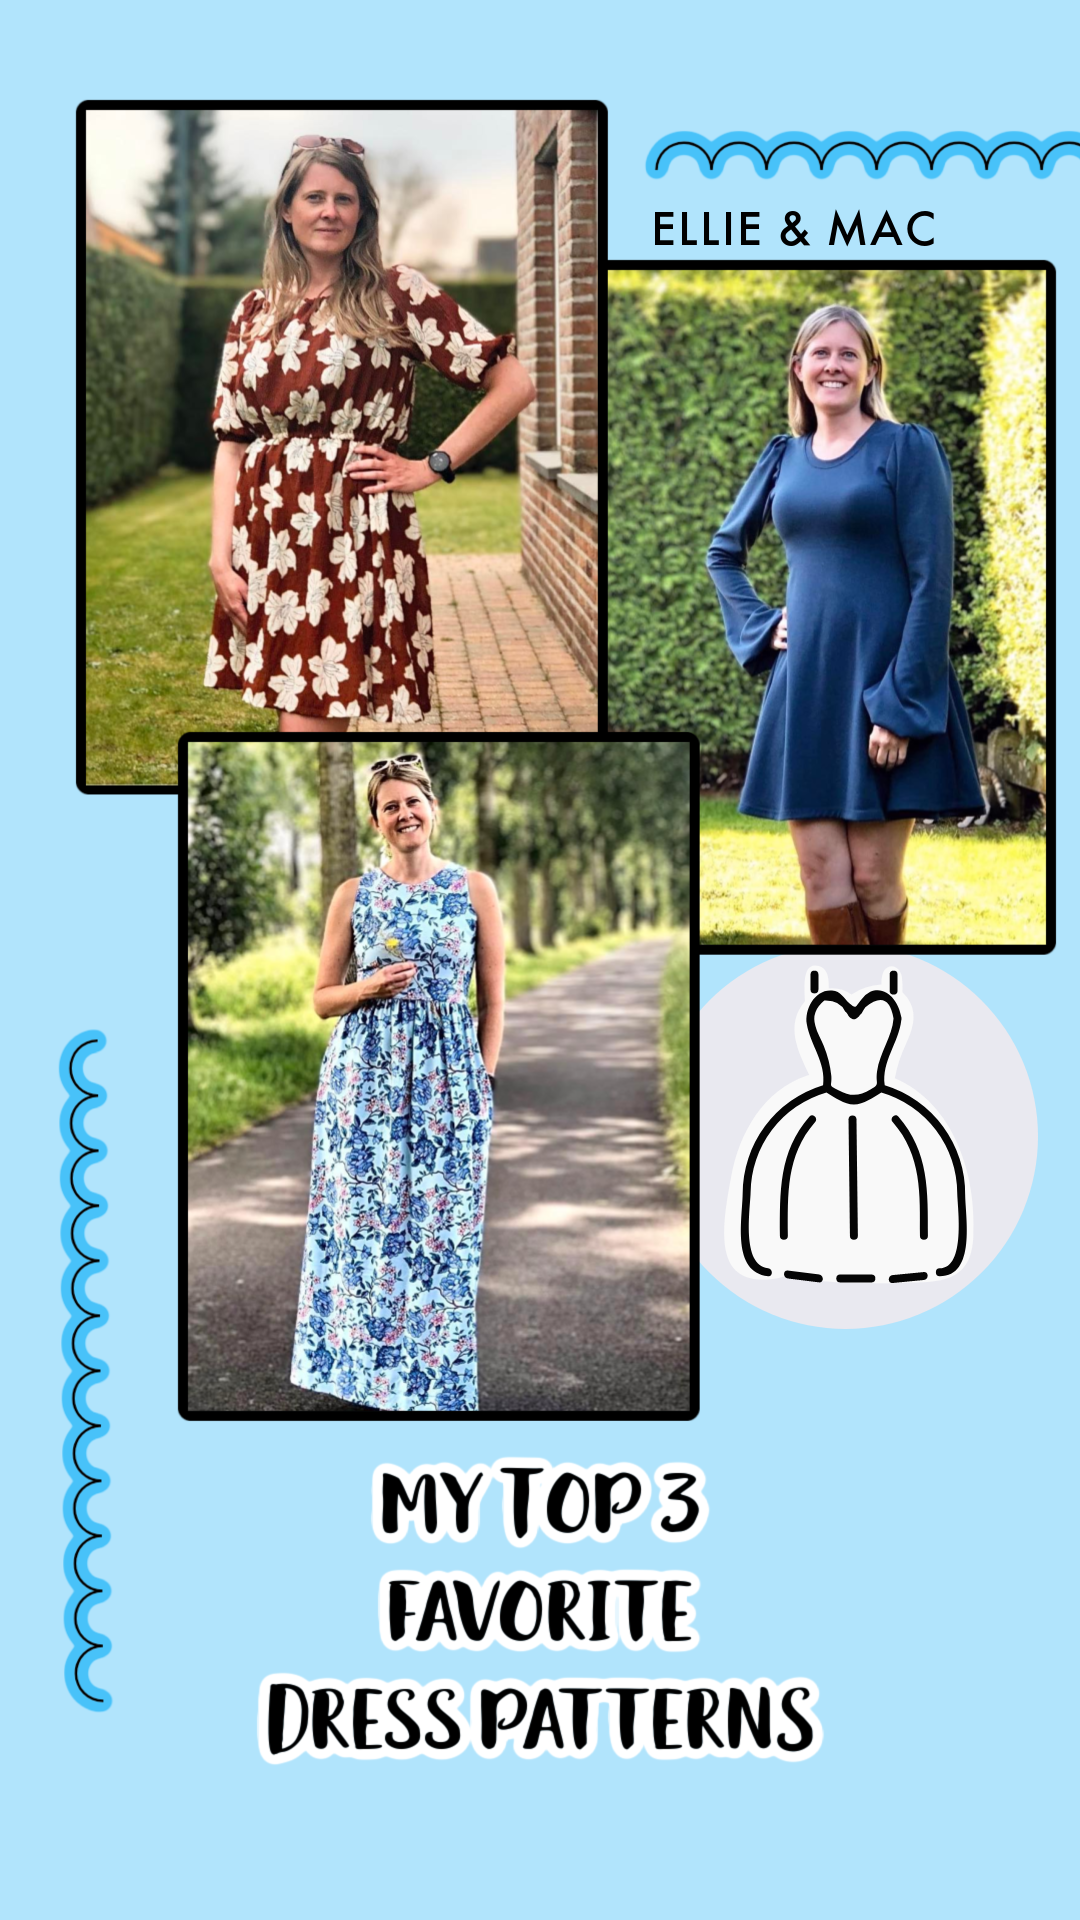 My Top 3: Favorite Dress Patterns